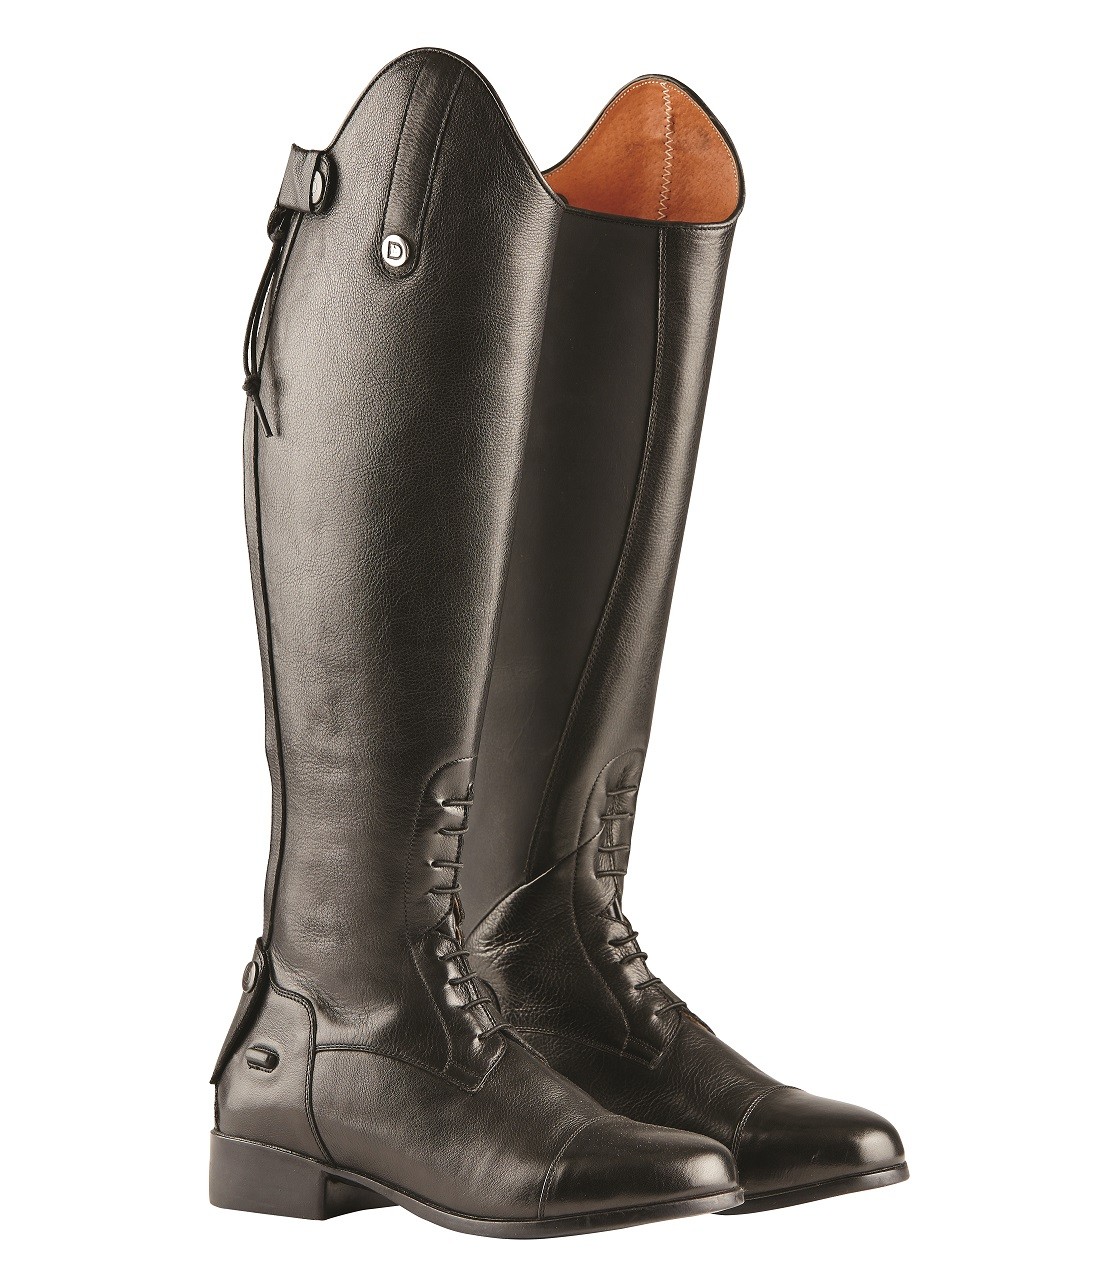 Adults 5 Dublin Holywell Ladies Tall Field Leather Boots Black Short Regular 